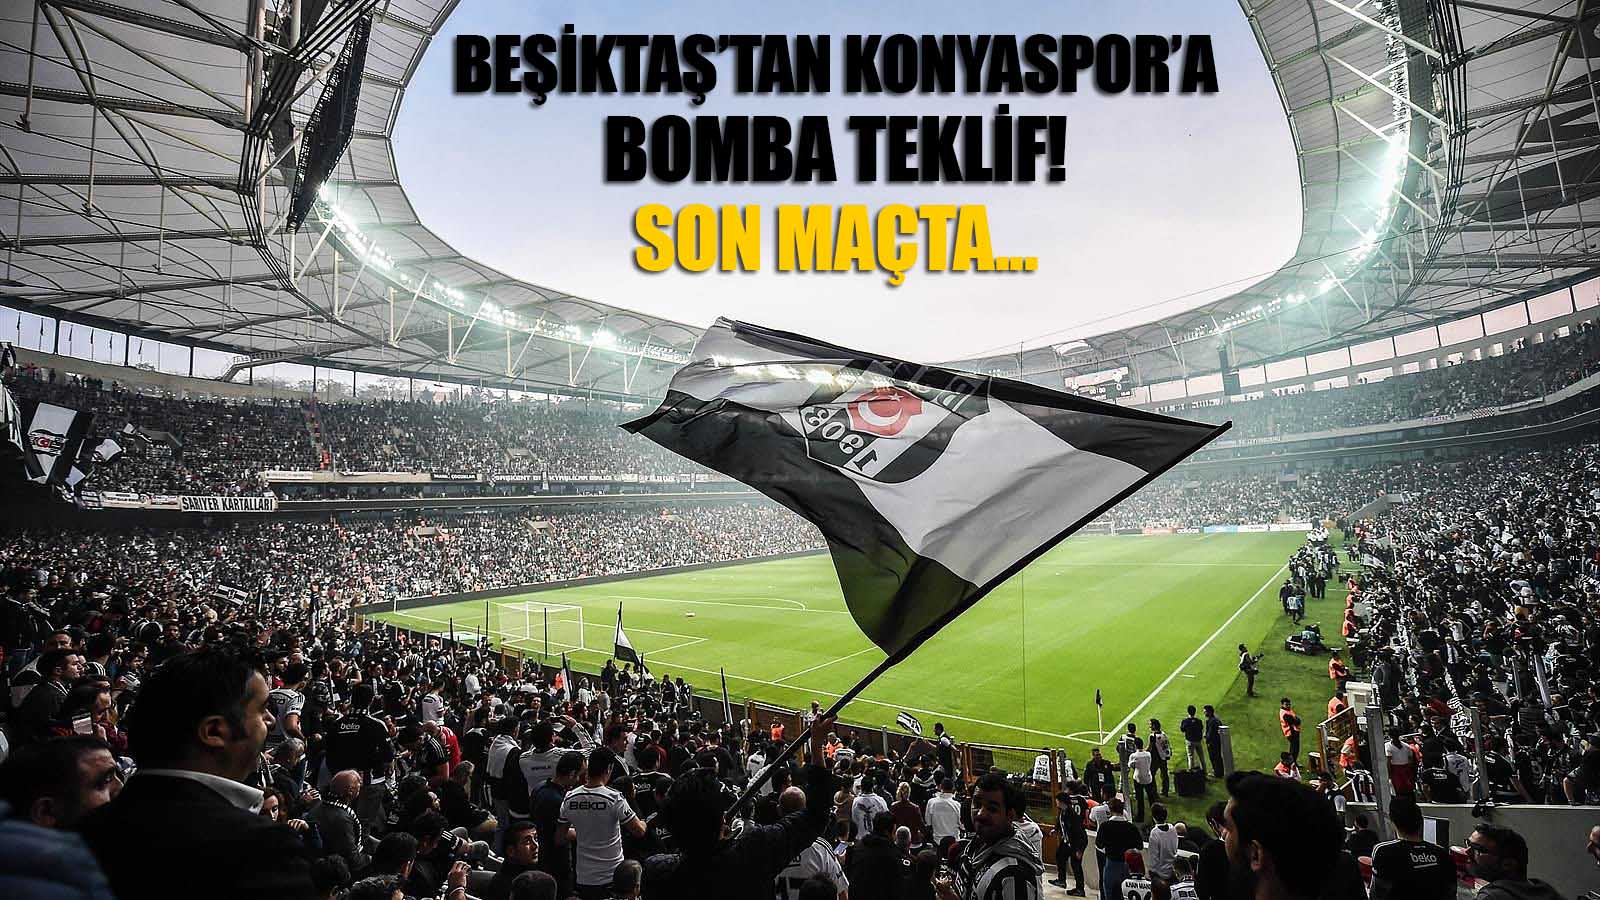 Beşiktaş’tan Konyaspor’a bomba teklif!